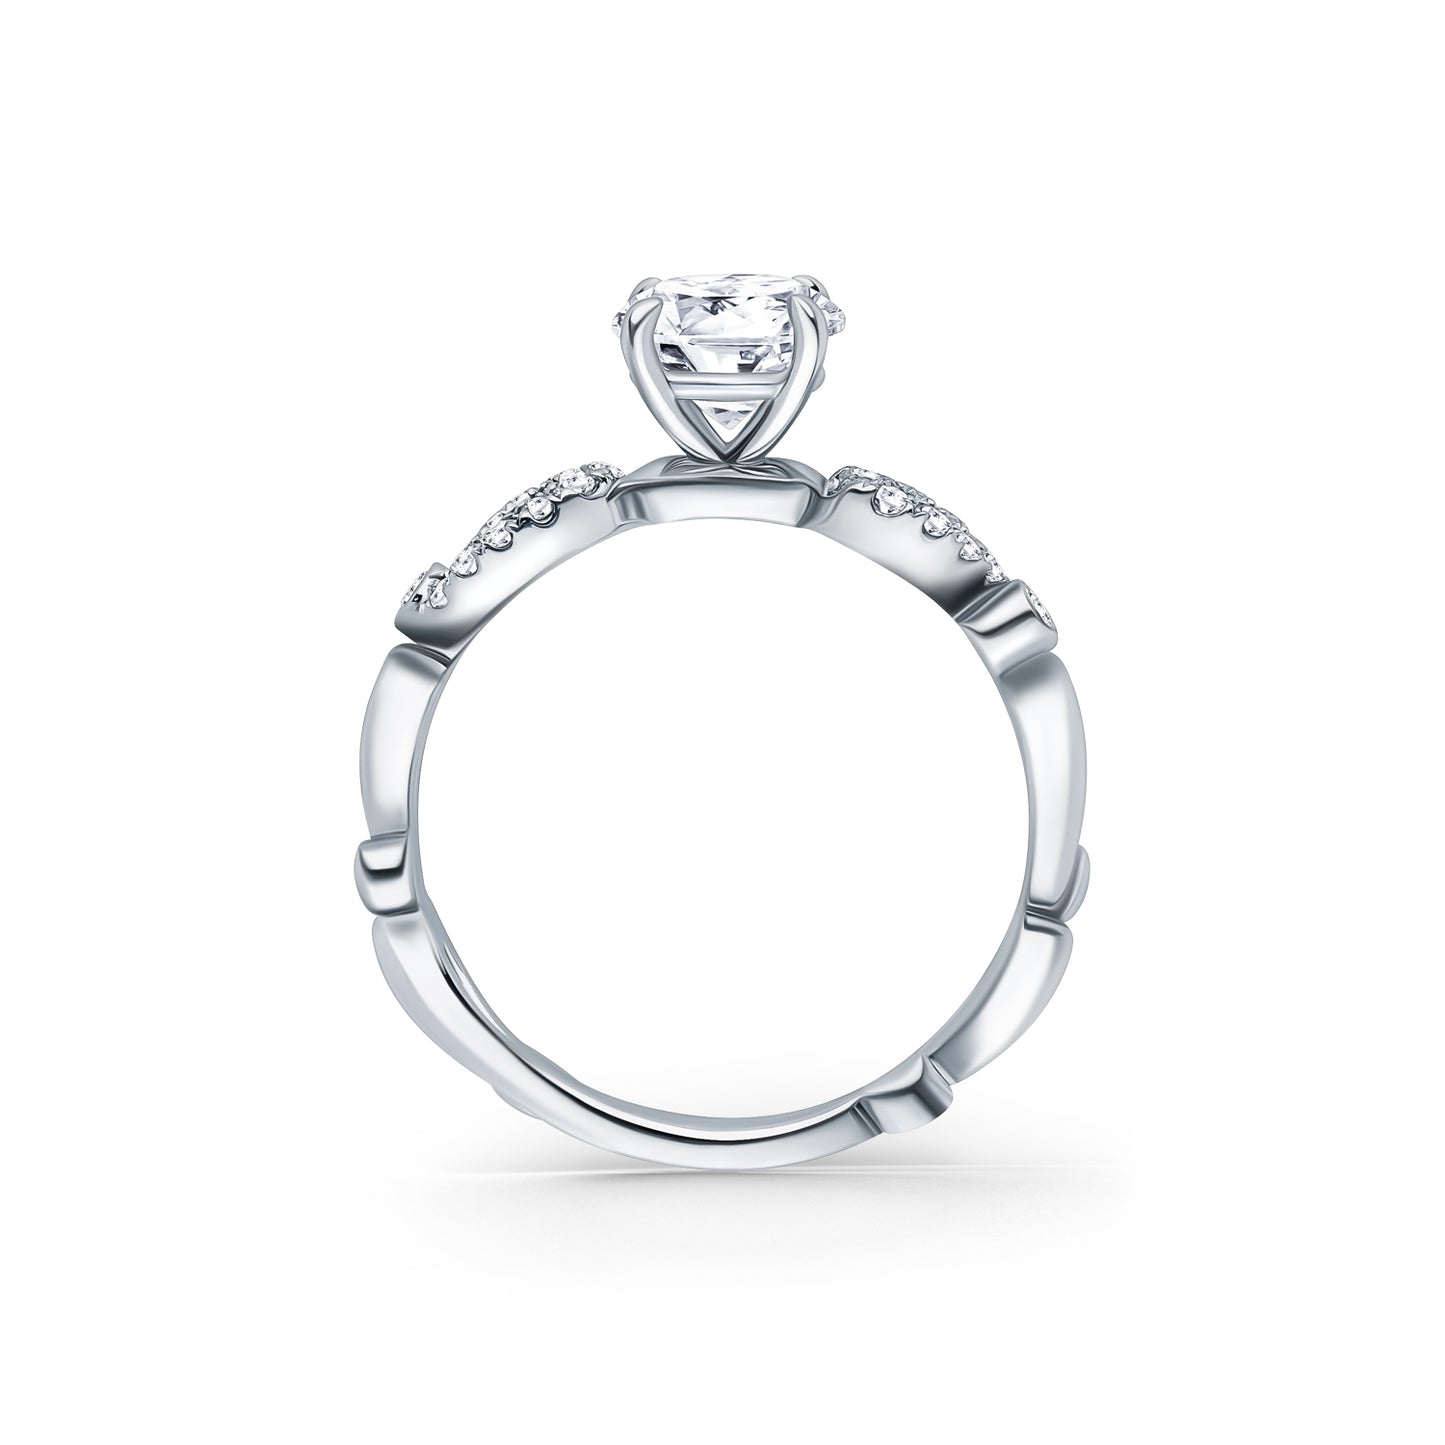 Vintage Inspired Crown Romantic Diamond Engagement Ring